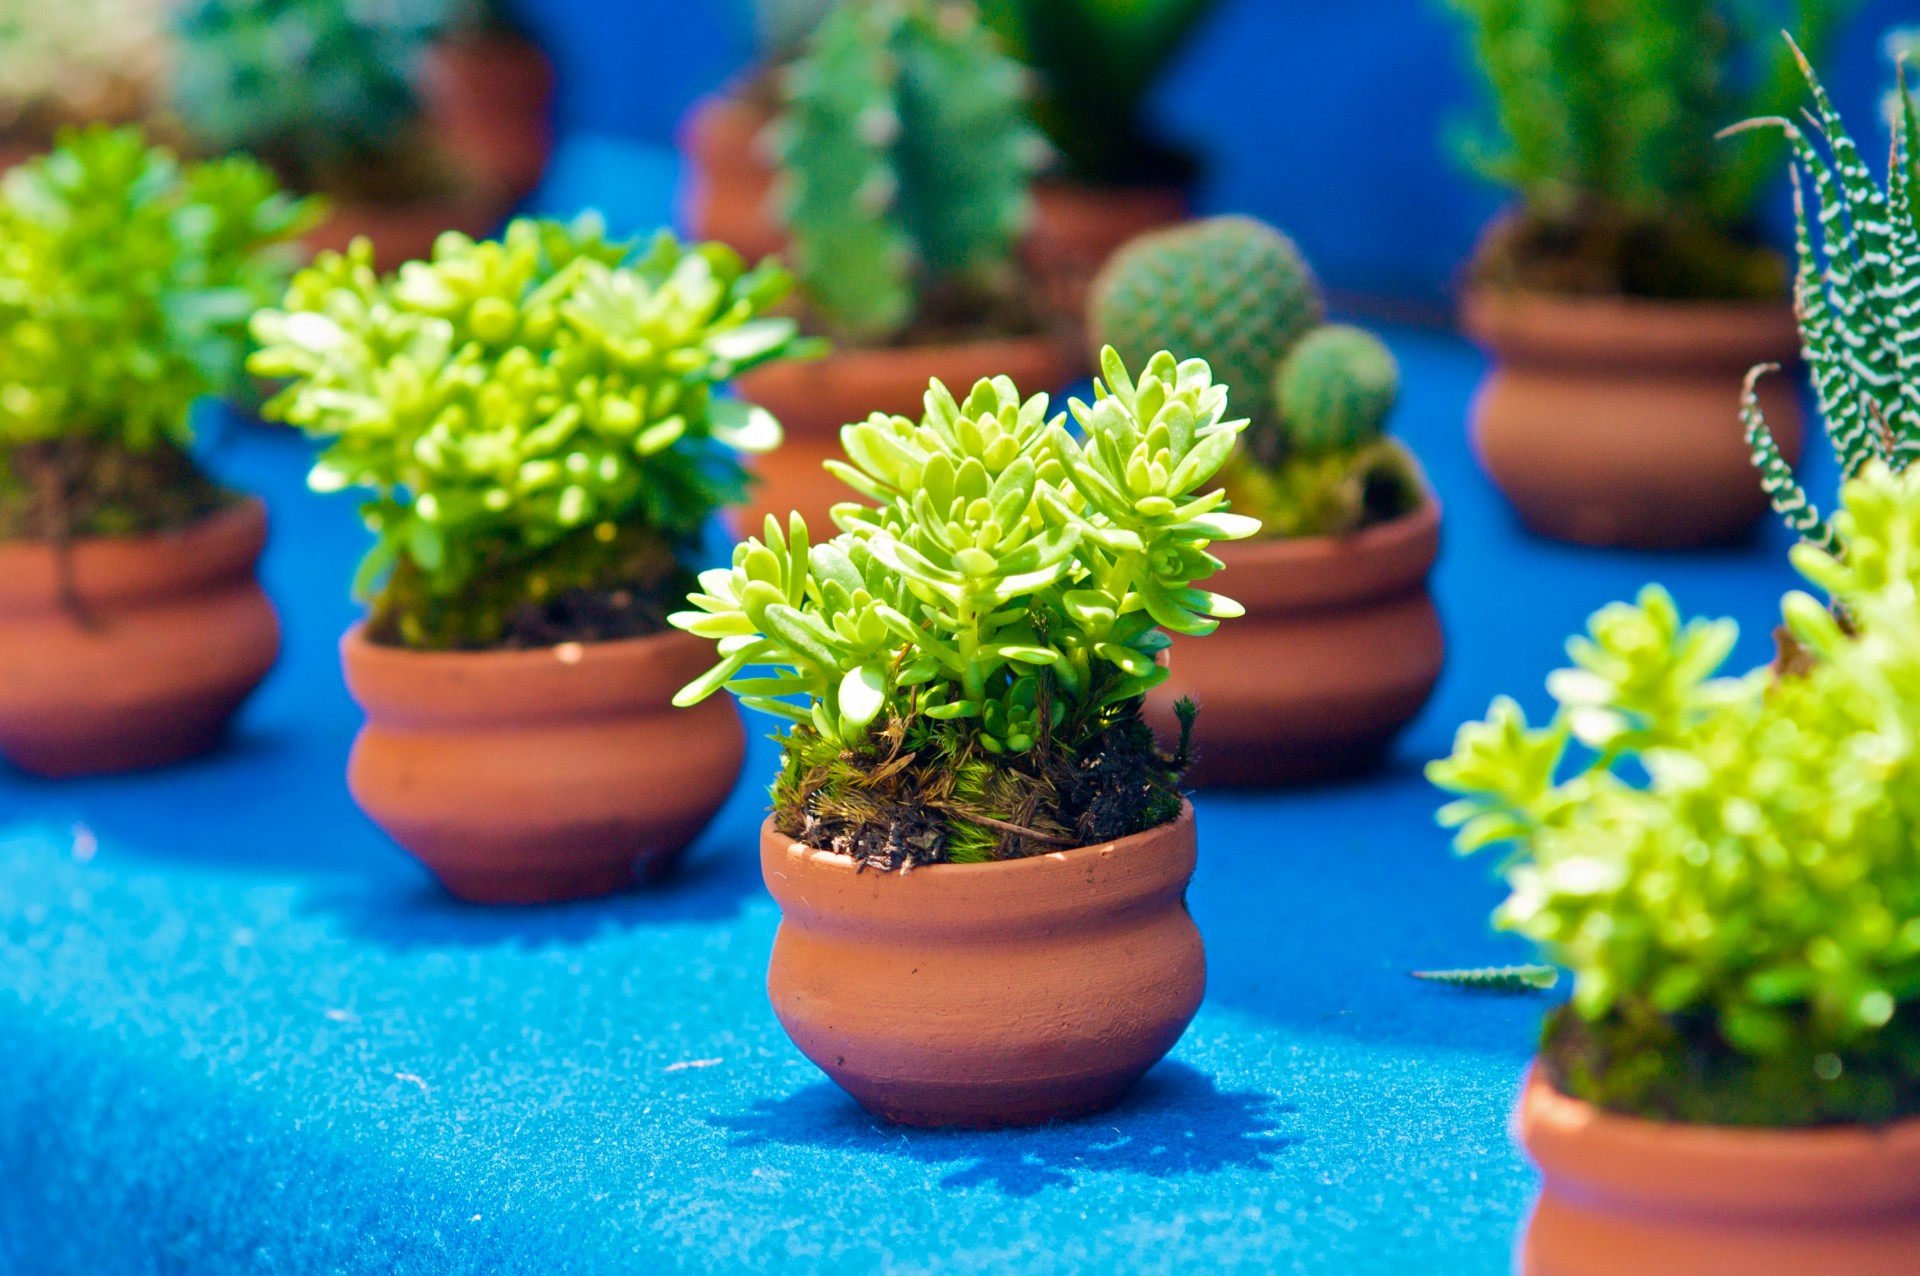 Little Green Plants For Sale